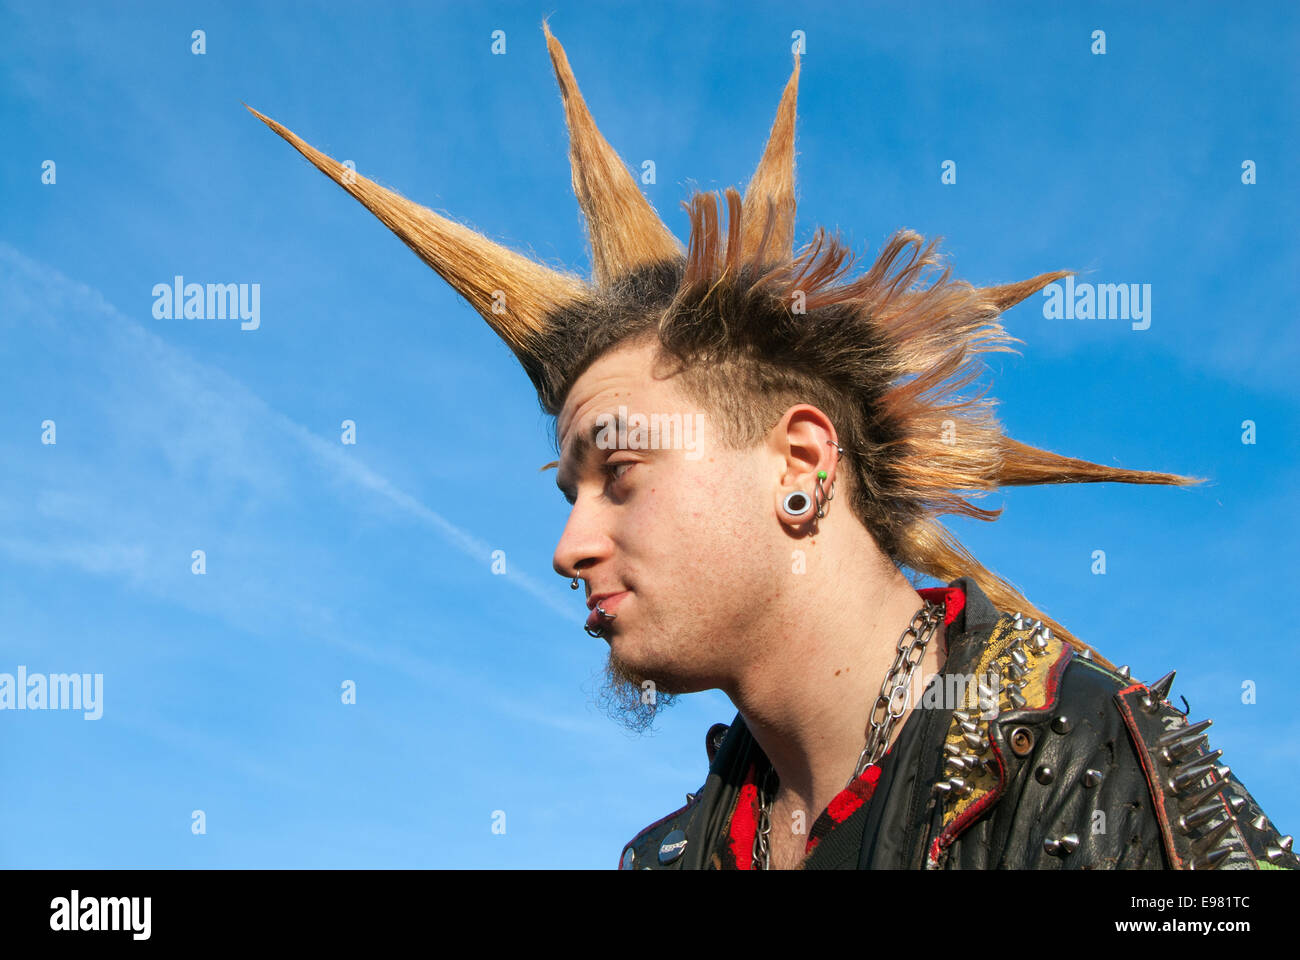 Liberty Spikes: A Punk Rock Rebellion - Mens Haircuts